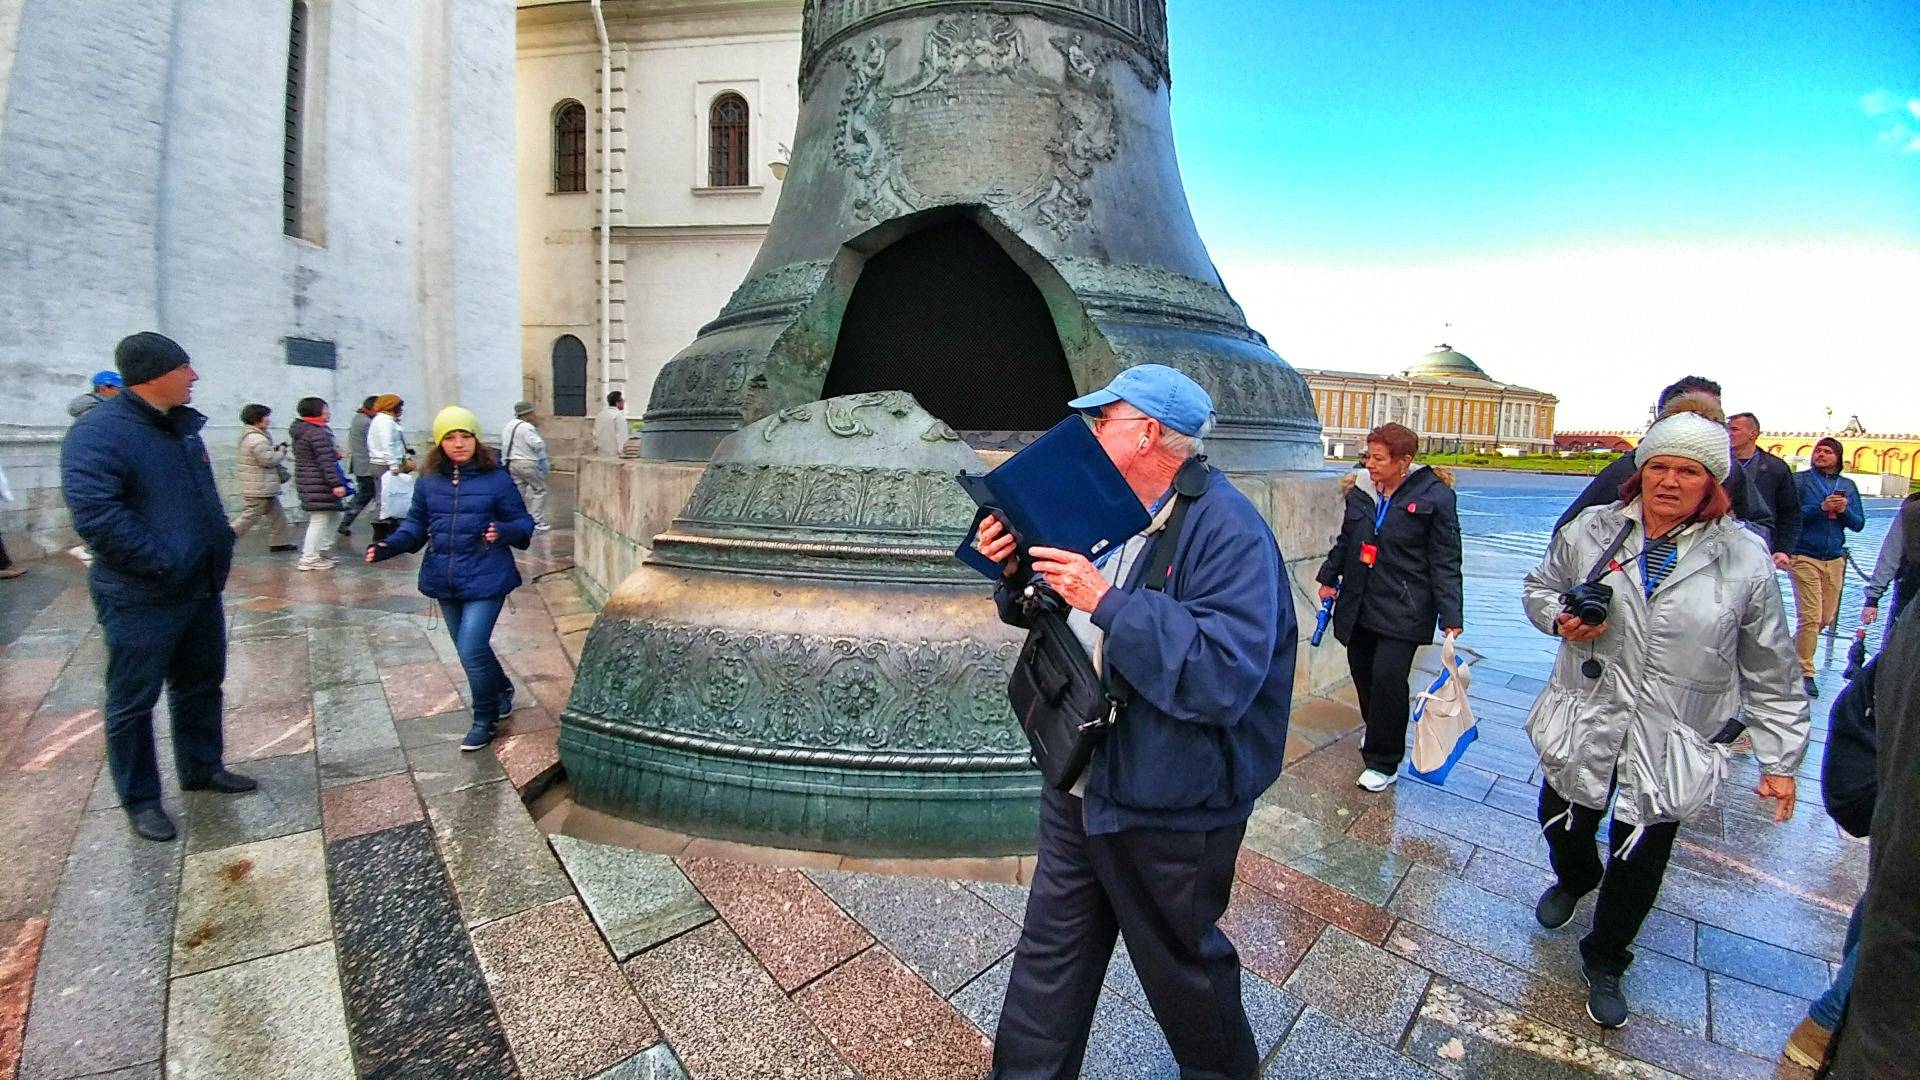 The Tsar Bell also known as the Tsarsky Kolokol, Tsar Kolokol III. And it is broken.